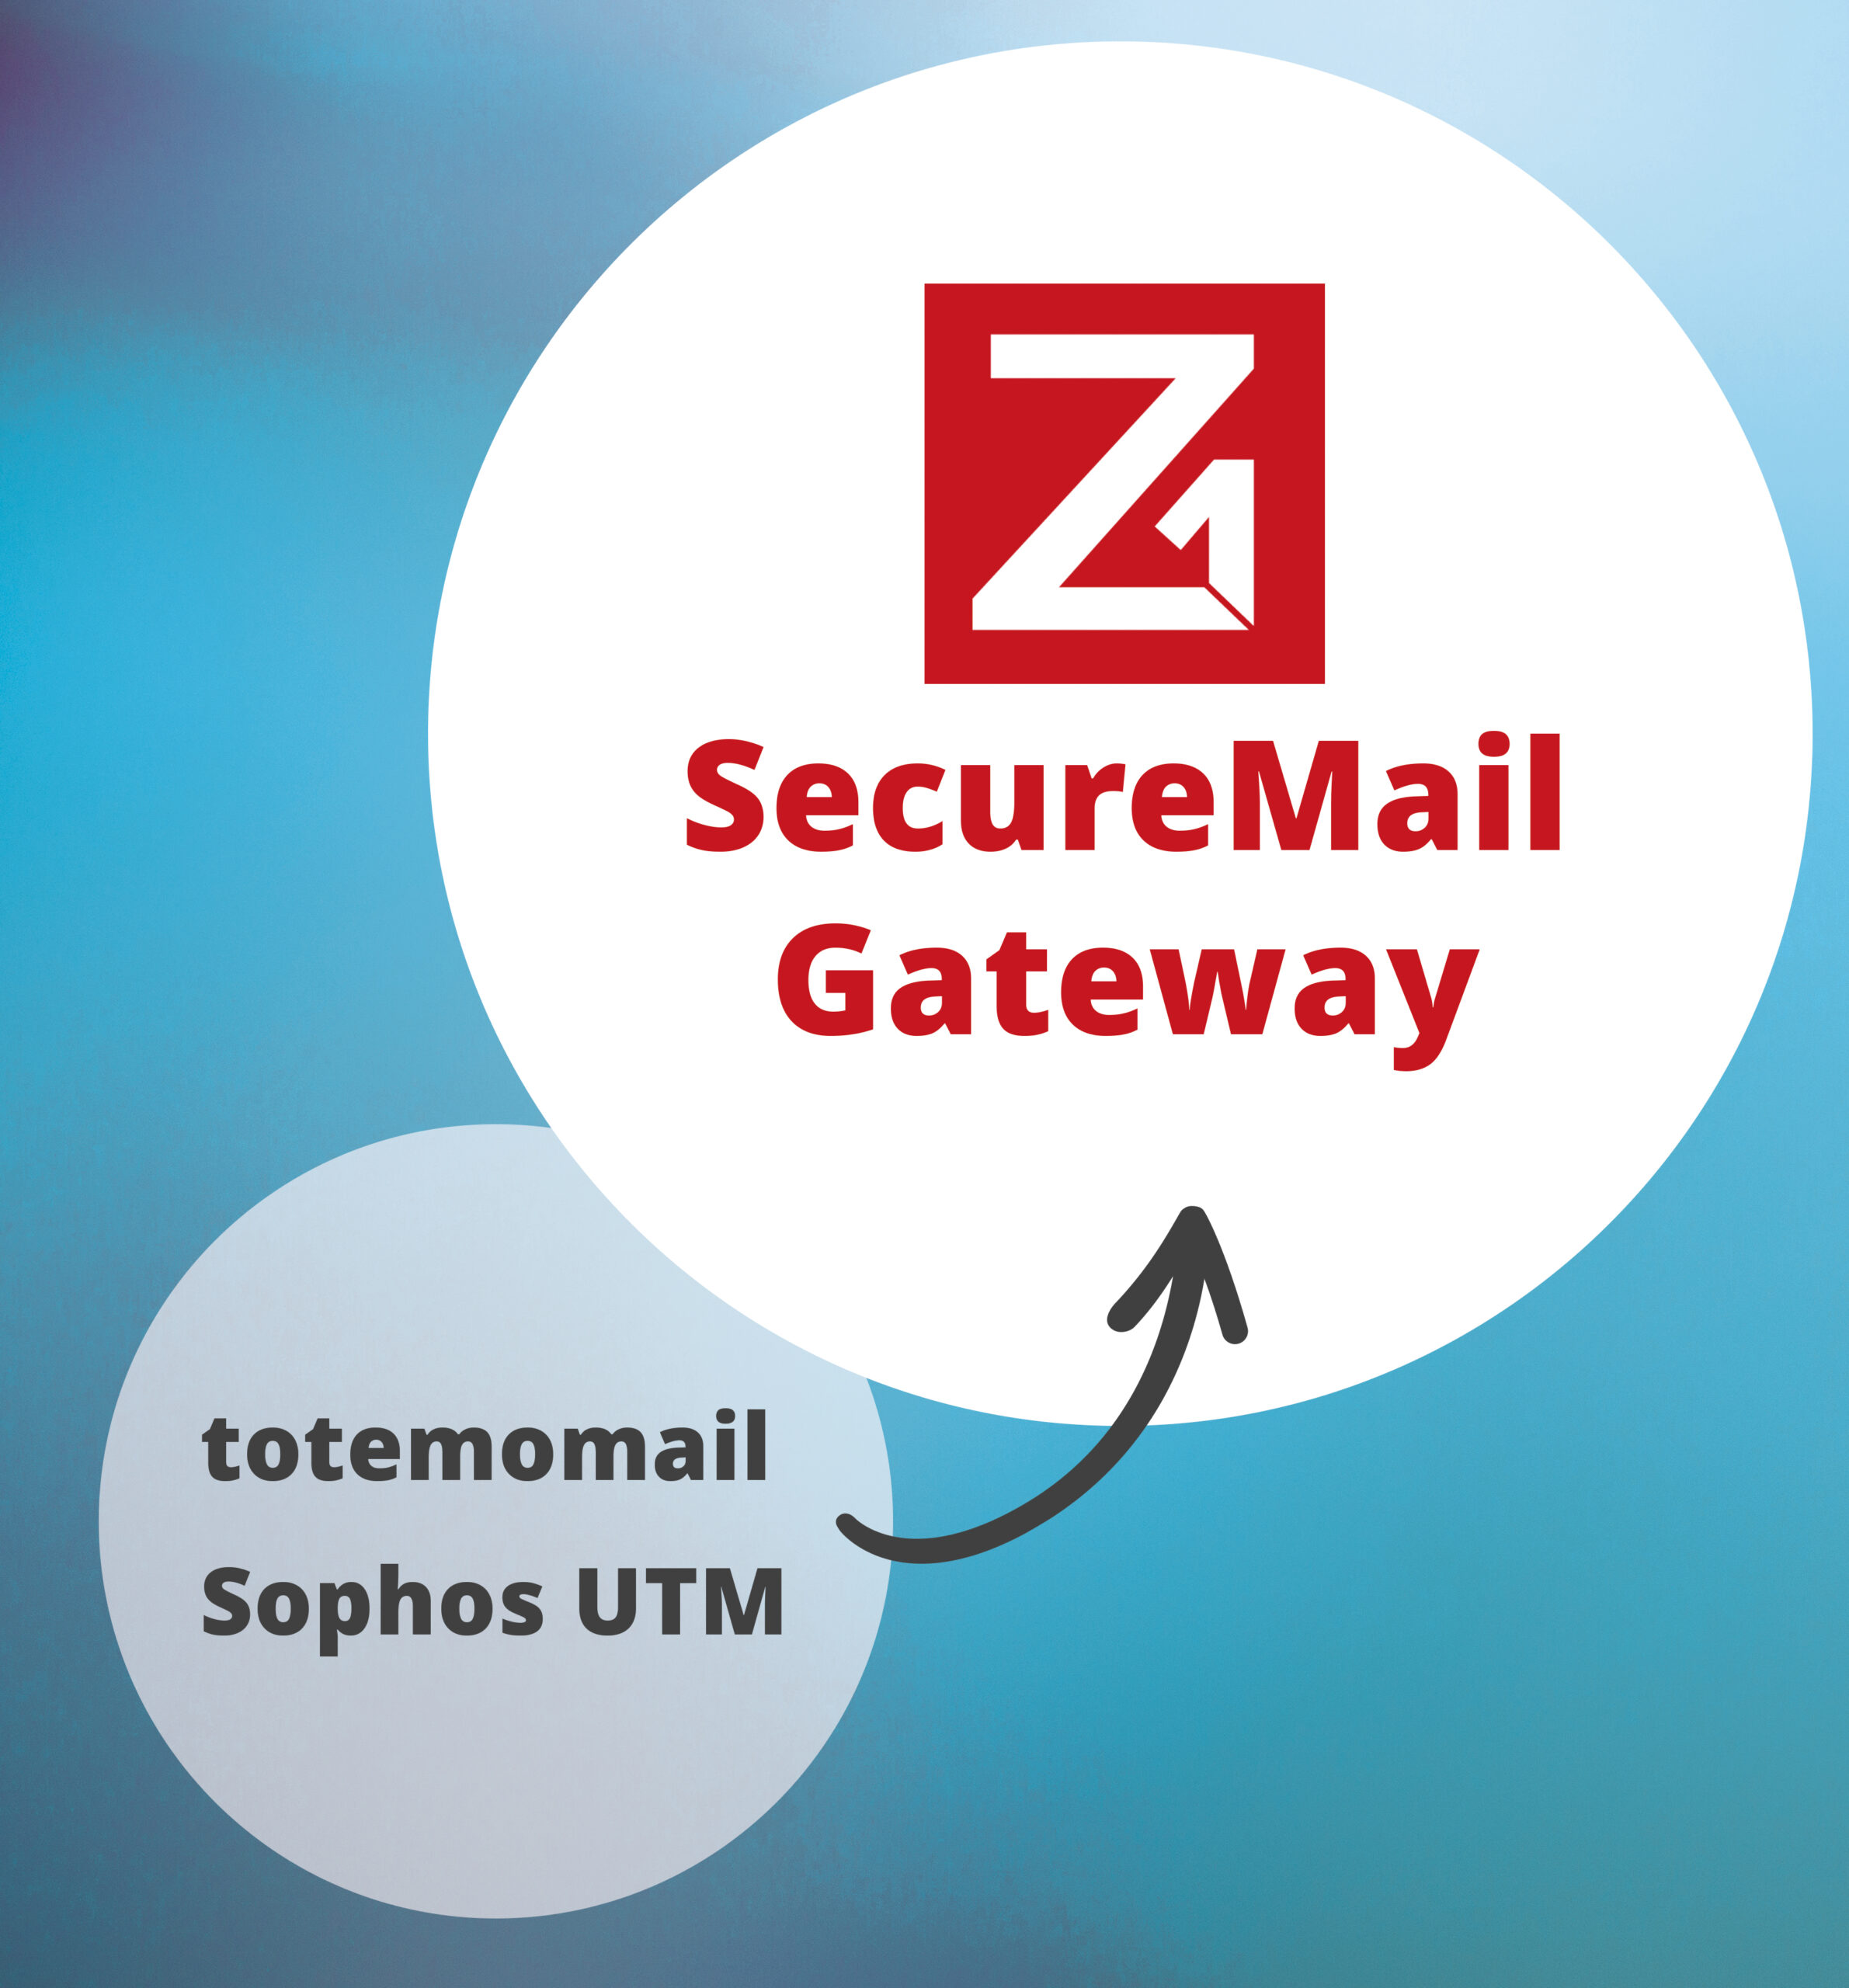 Z1 SecureMail Gateway as alternative to Sophos UTM & totemomail